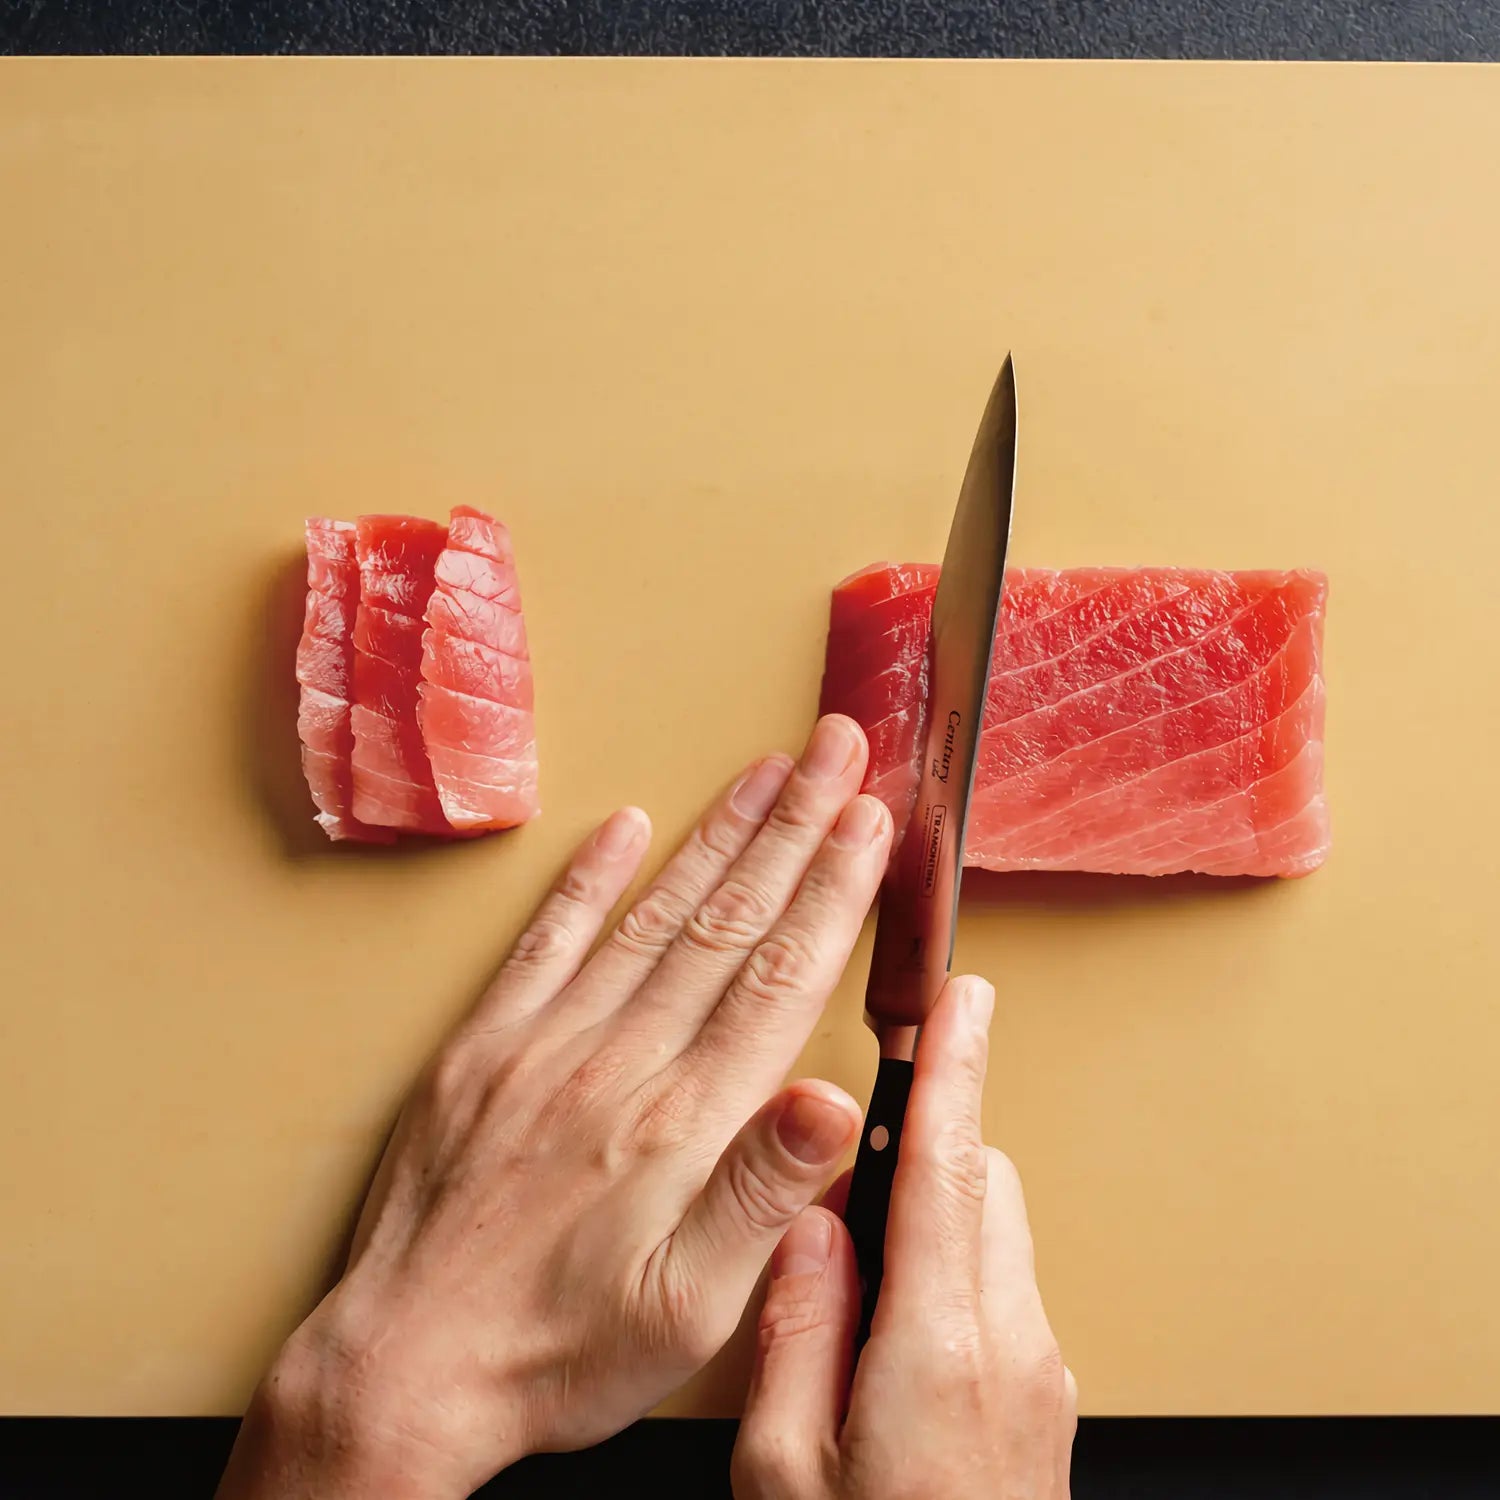 Asahi Household Rubber Cutting Board Cookin Cut L 4523512000192